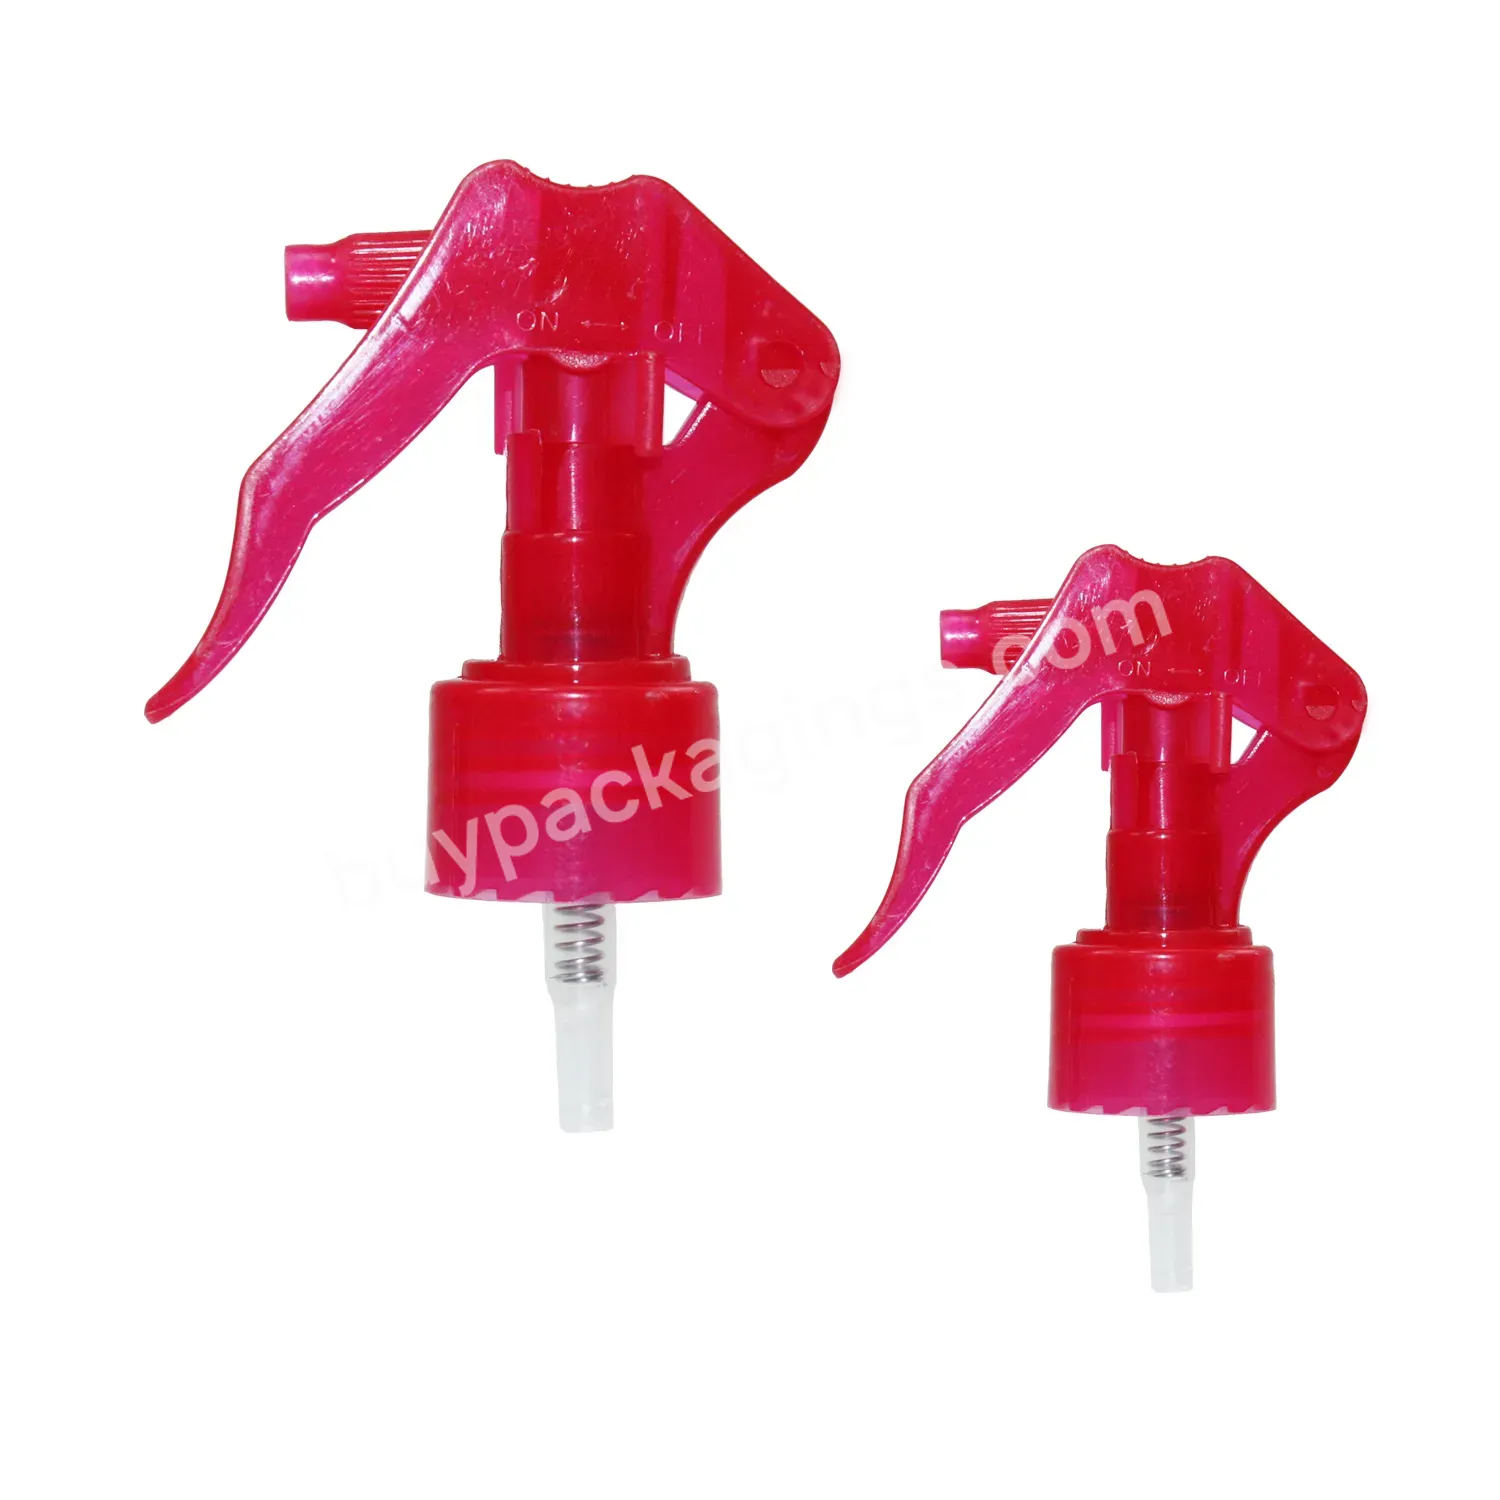 Plastic Trigger Sprayers Head 24/410 28/410 From China - Buy Plastic Spray Trigger,Plastic Trigger Spray,Sprayer Trigger.